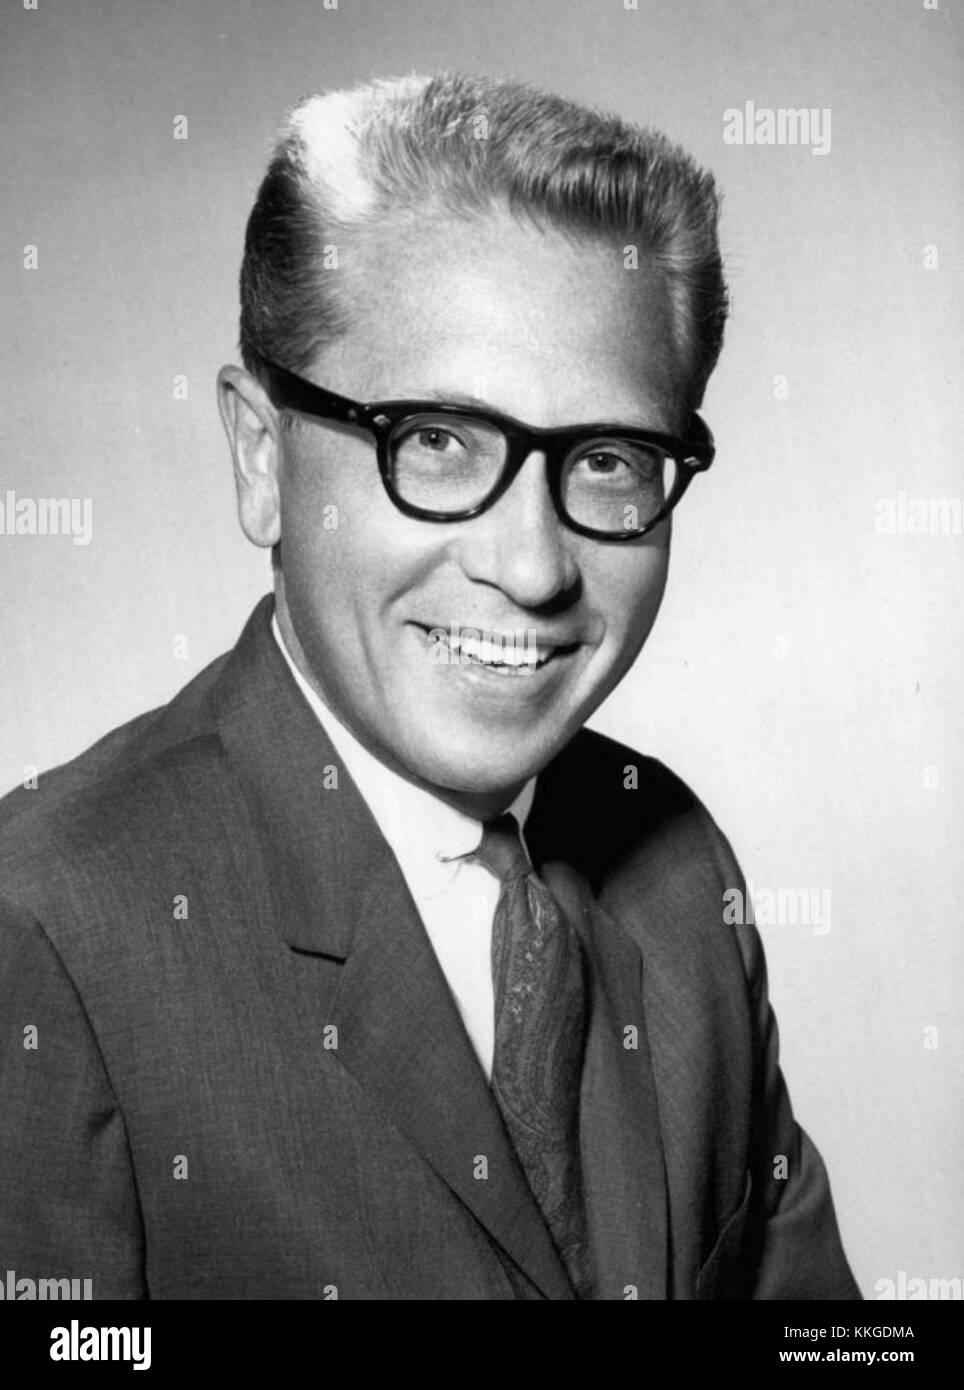 Allen Ludden 1961 Stock Photo - Alamy